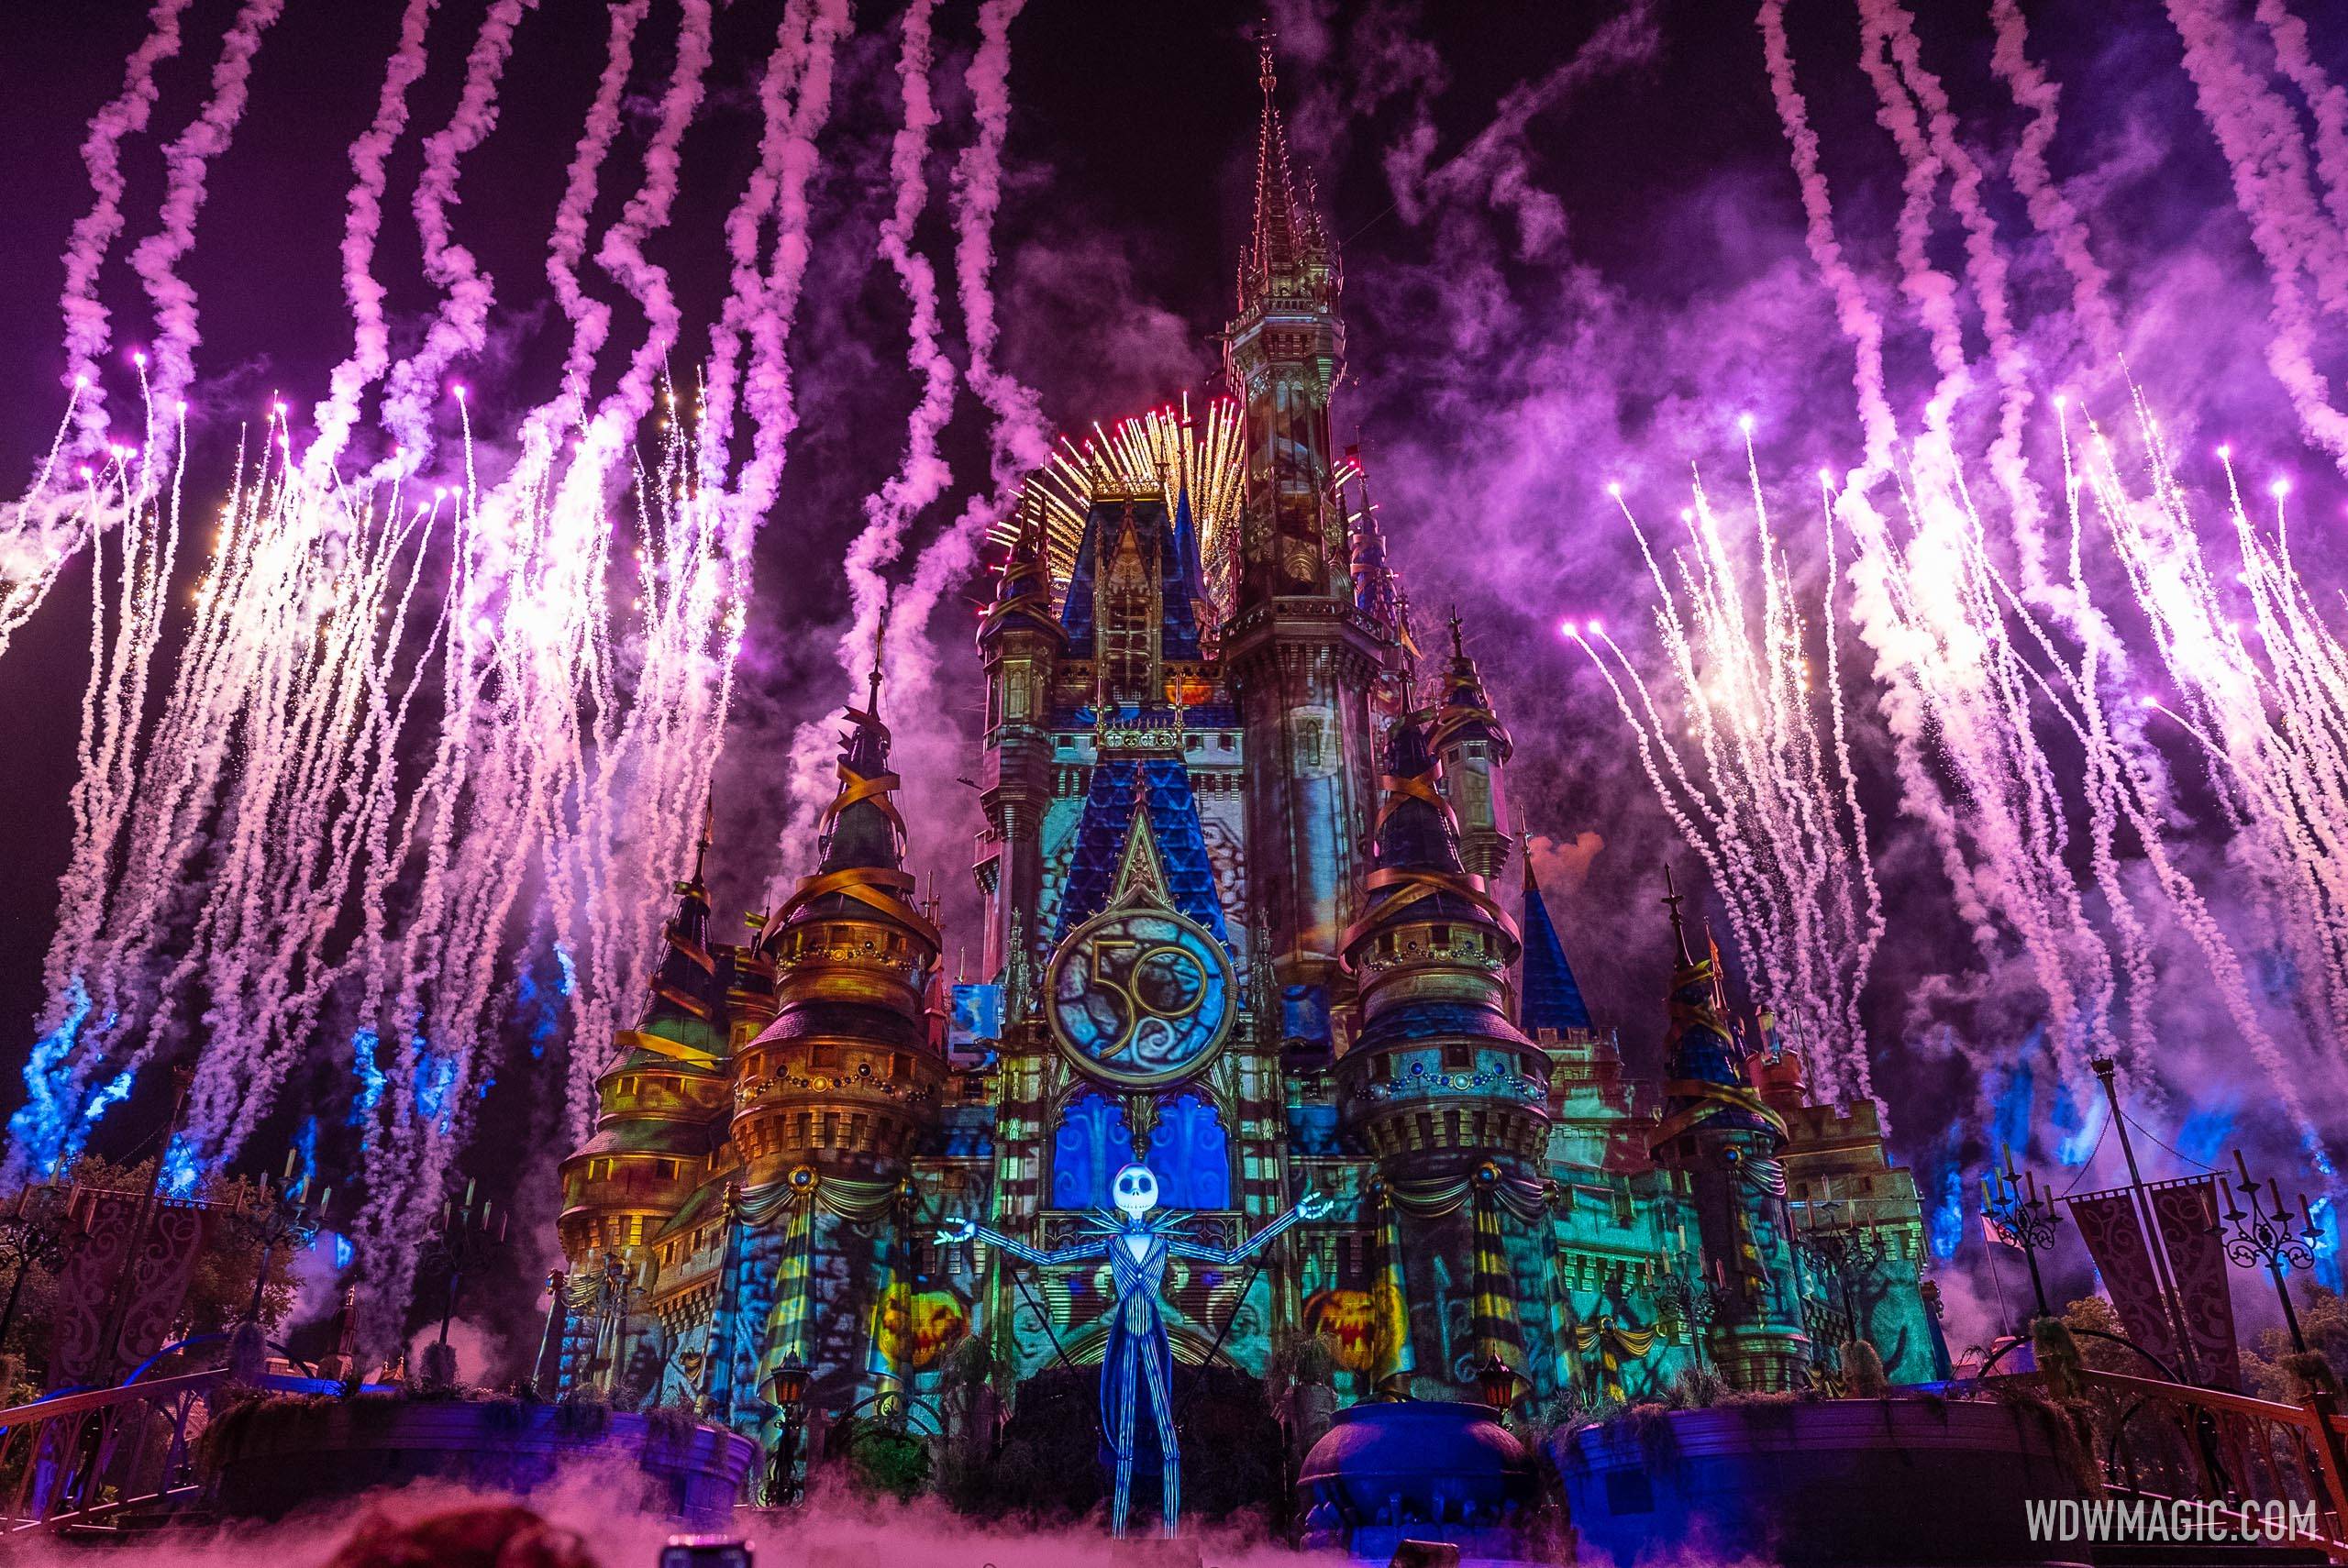 Disney's Not-So-Spooky Fireworks